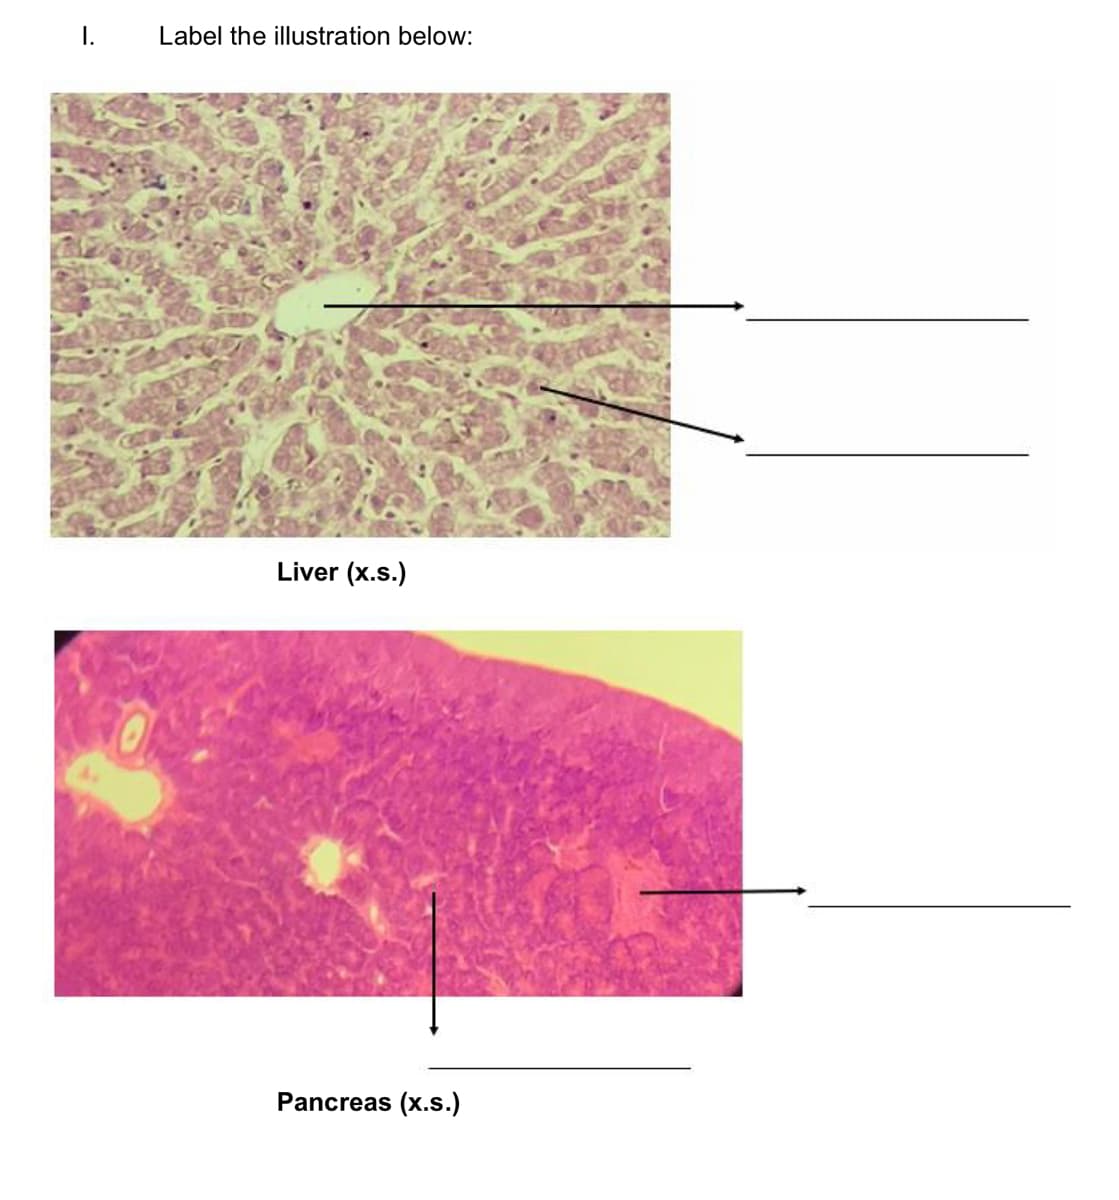 Label the illustration below:
Liver (x.s.)
Pancreas (x.s.)
